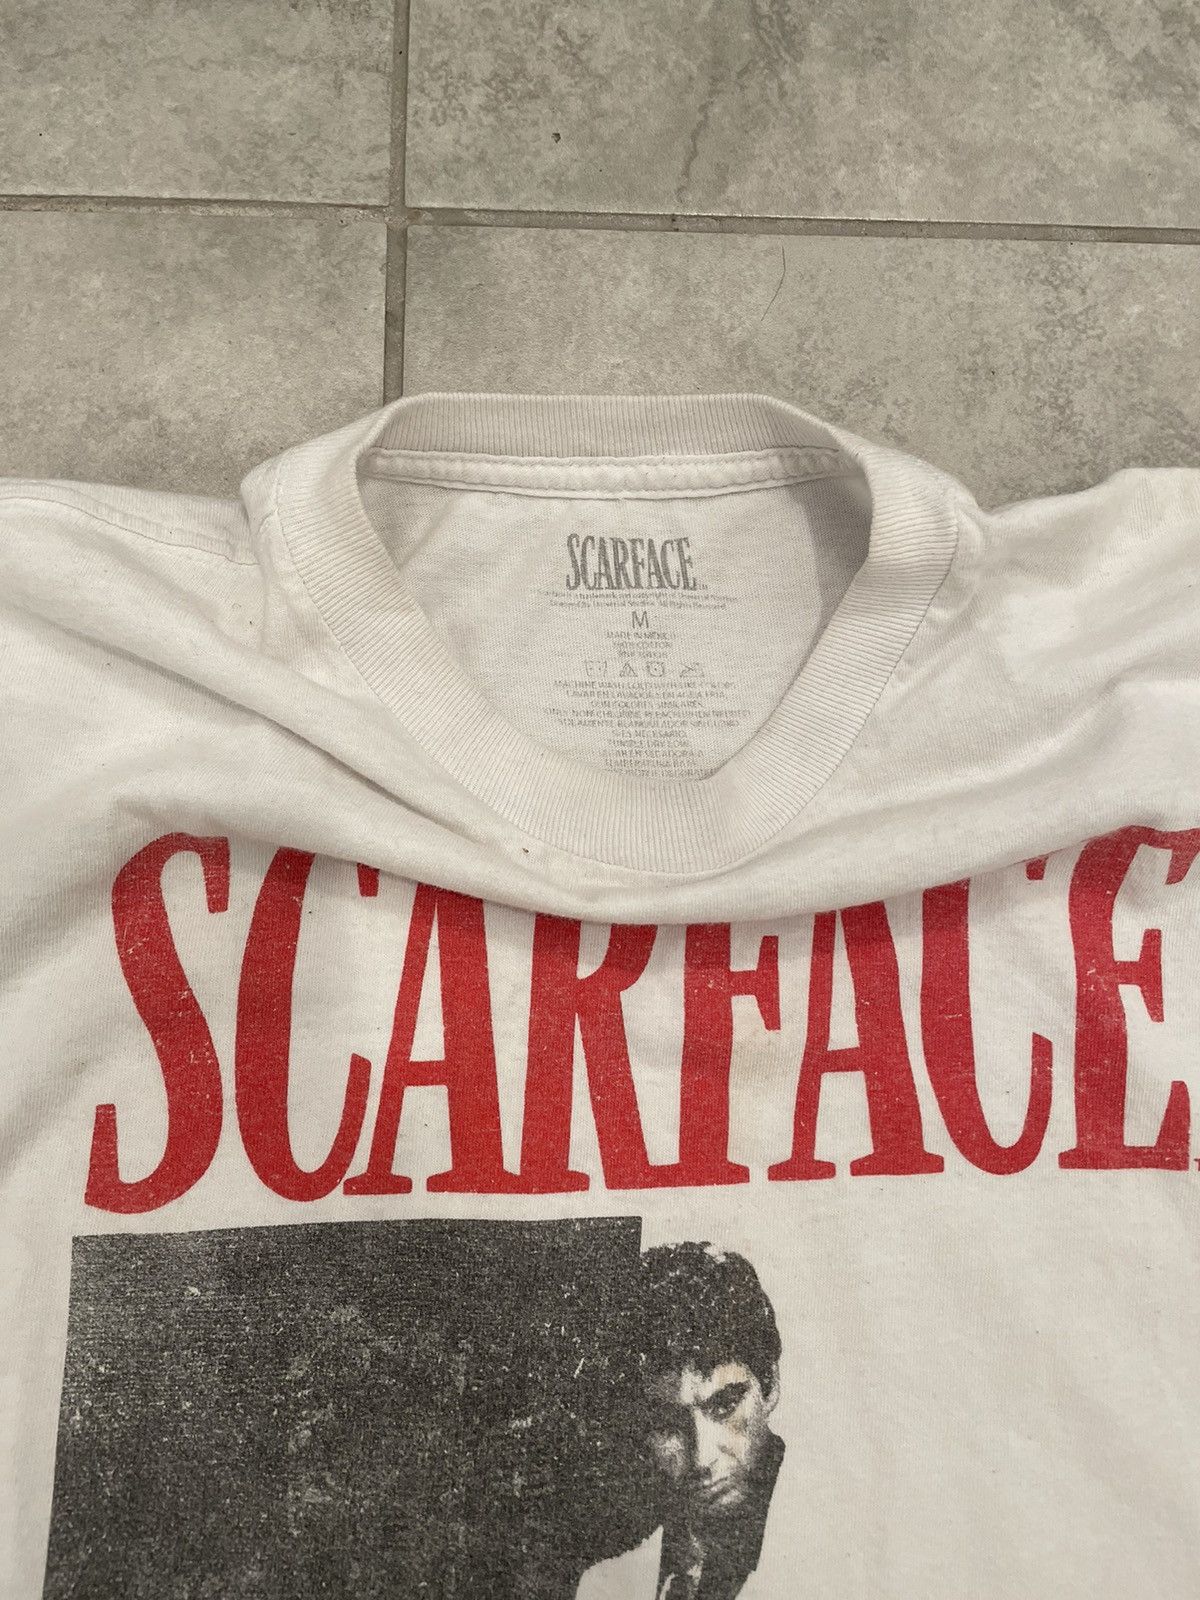 Vintage Universial Studios “Scarface” Tee Size US M / EU 48-50 / 2 - 5 Preview